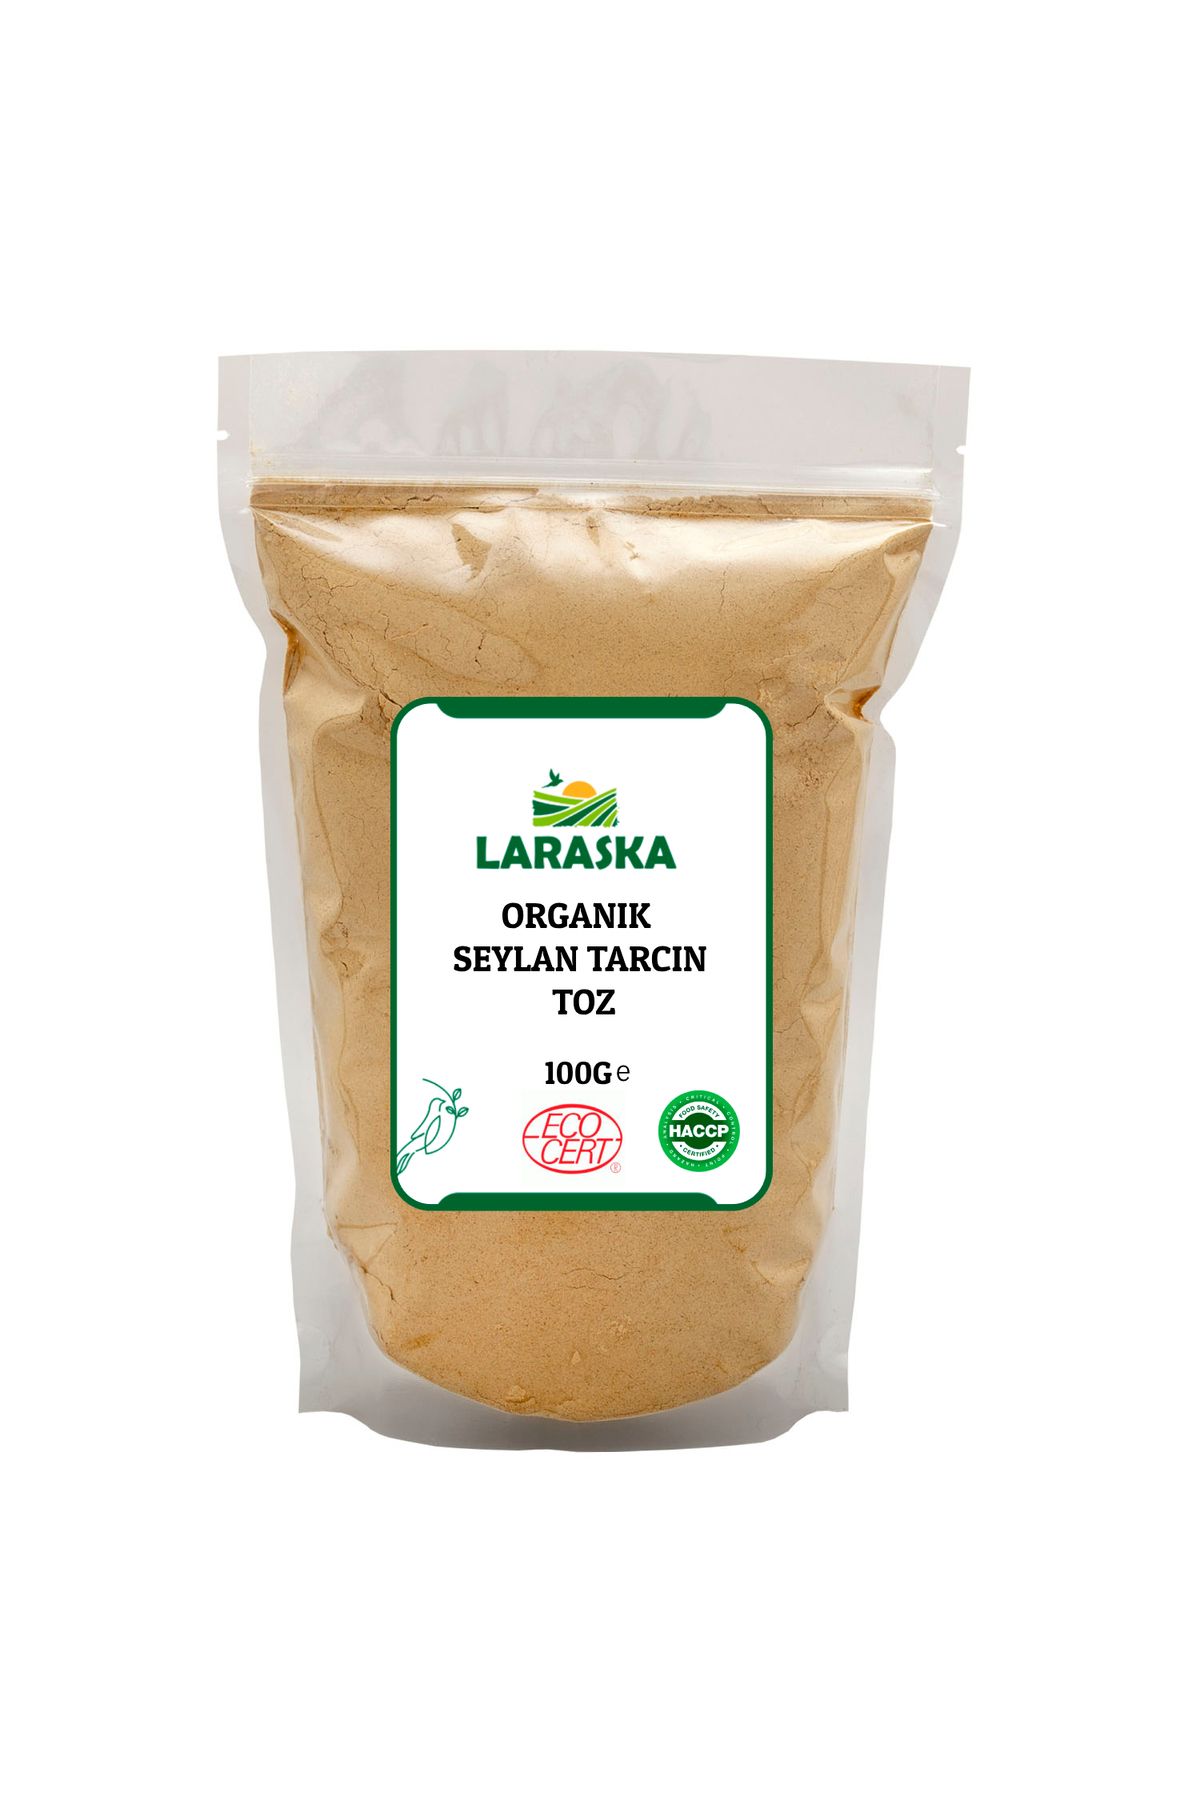 Laraska Organik Seylan - Seylon Tarçın Toz 100g - Organic Ceylon Cinnamon Powder 100g- Organically Certified